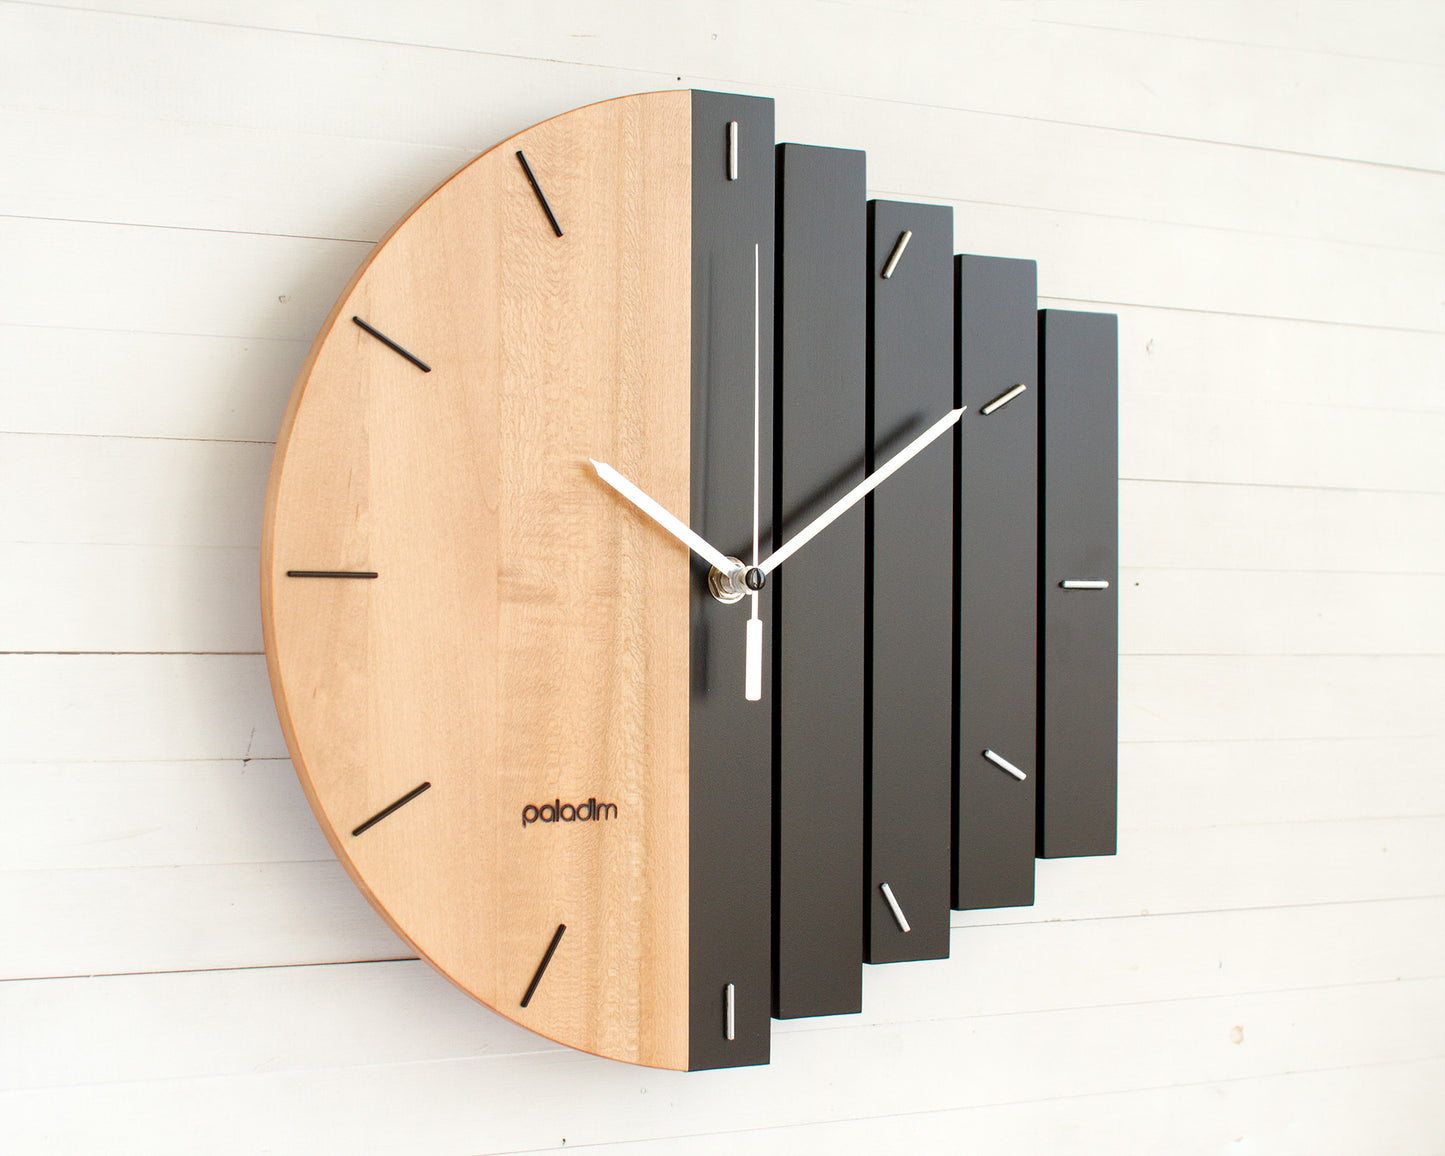 MIXOR disbalanced wall clock